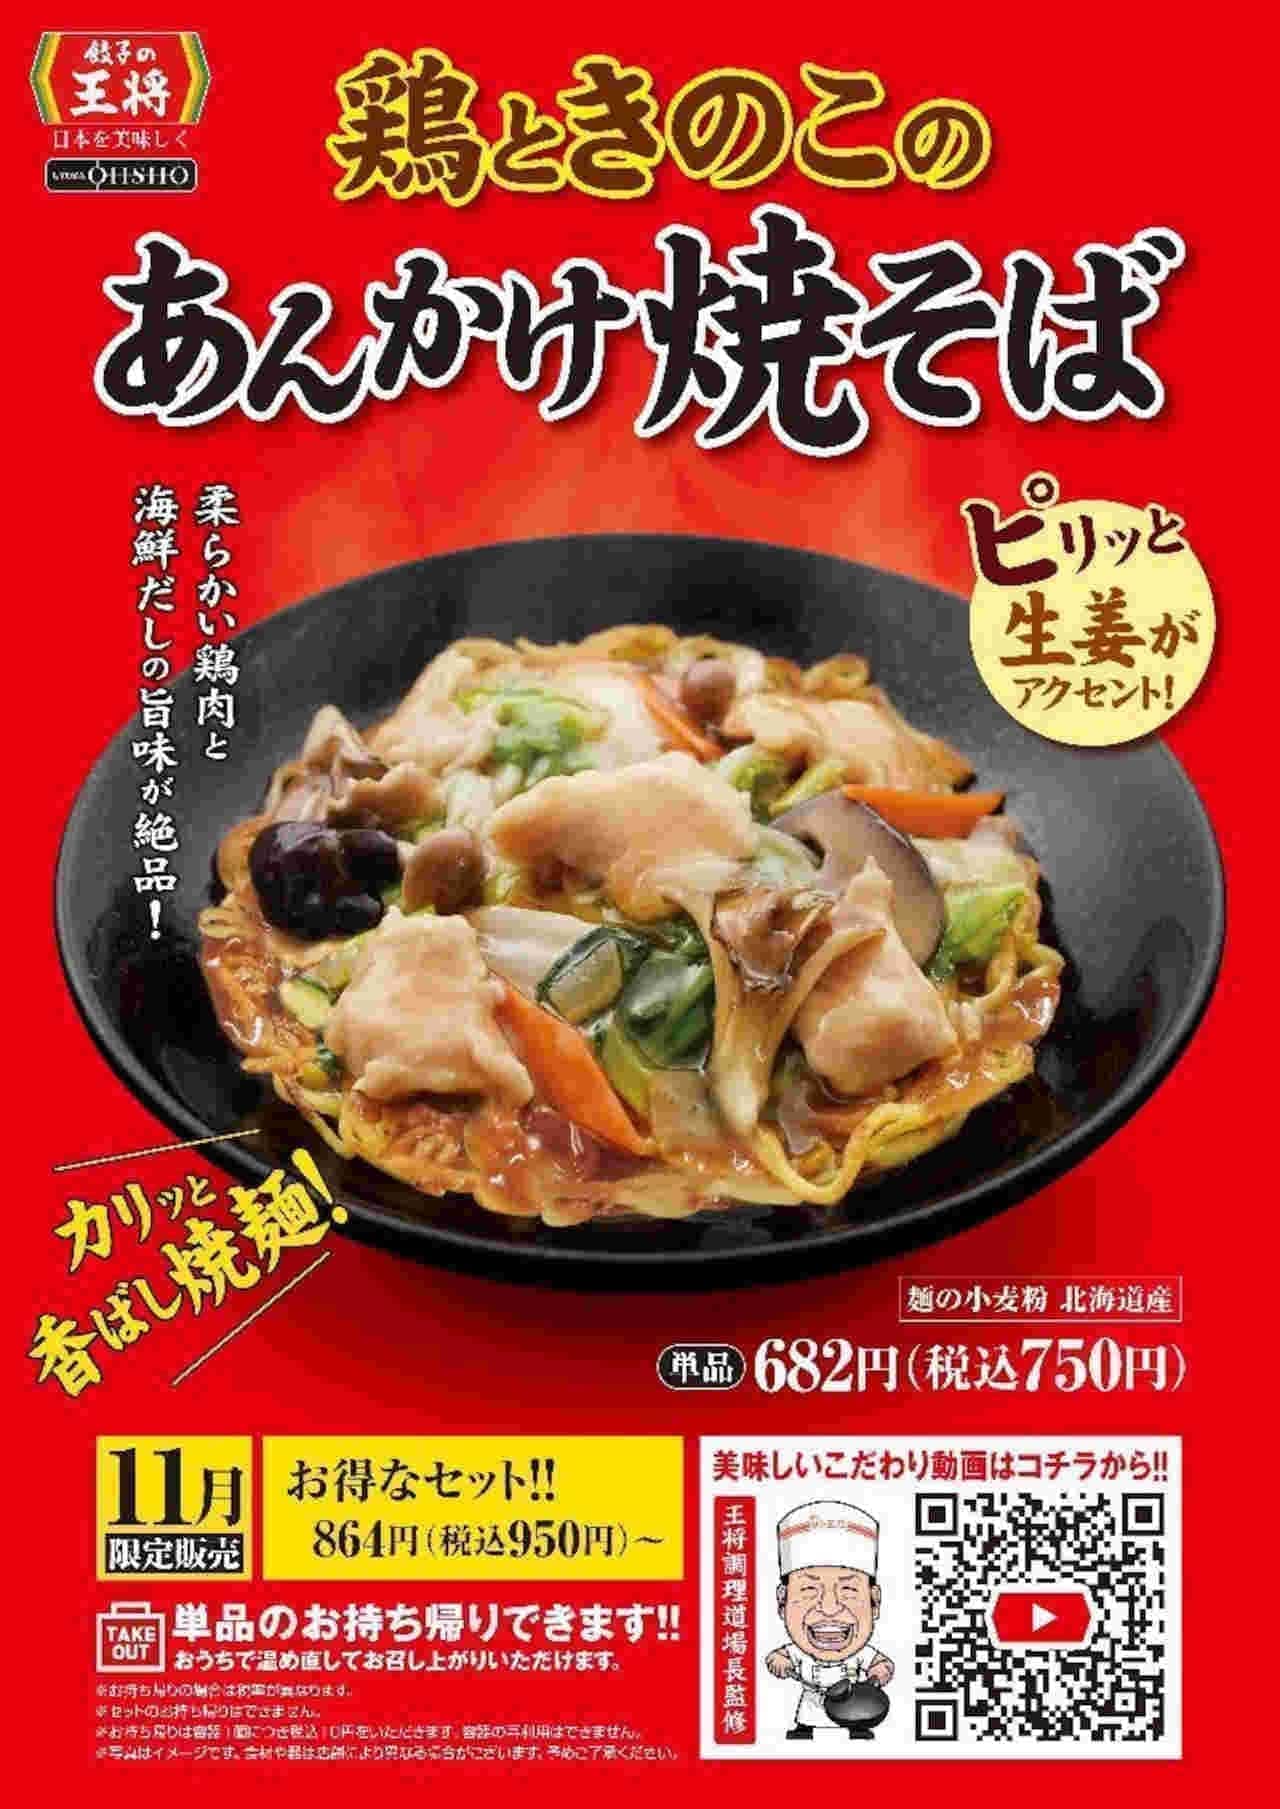 Gyoza no Ousho "Chicken and Mushroom Ankake Yakisoba